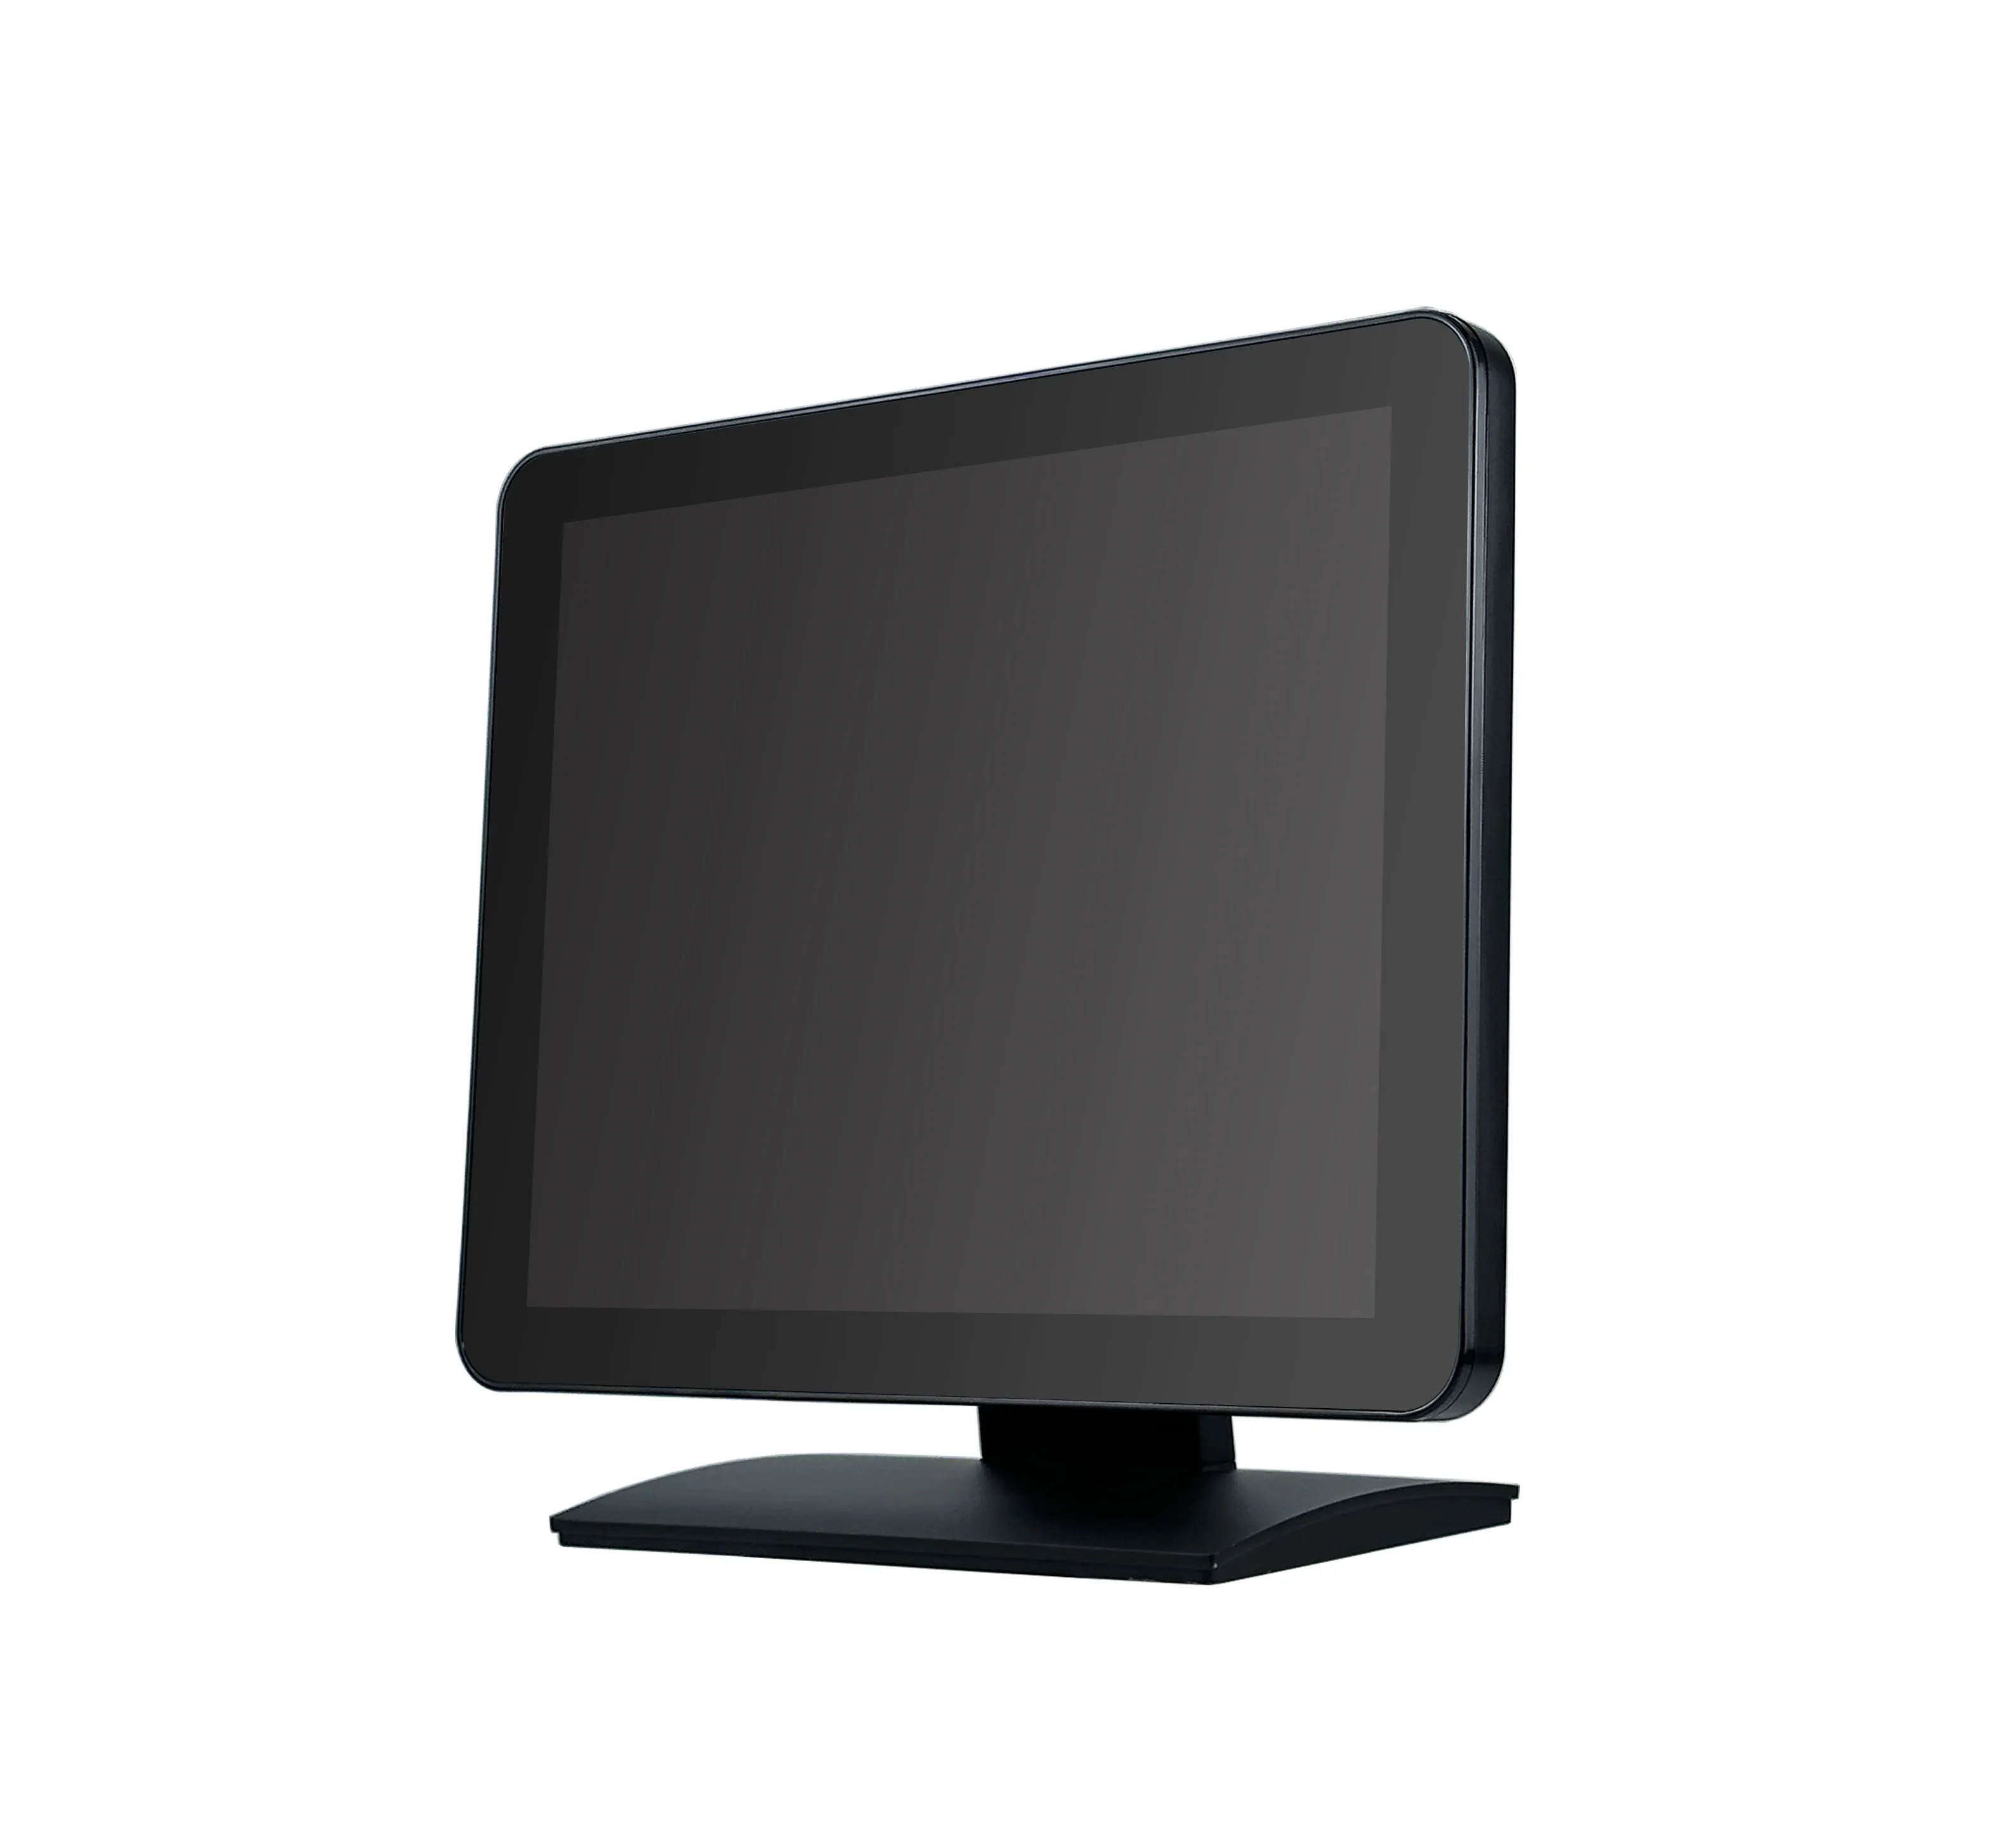 Monitor layar sentuh POS 17 inci, dengan mesin pos multi sentuh kapasitif